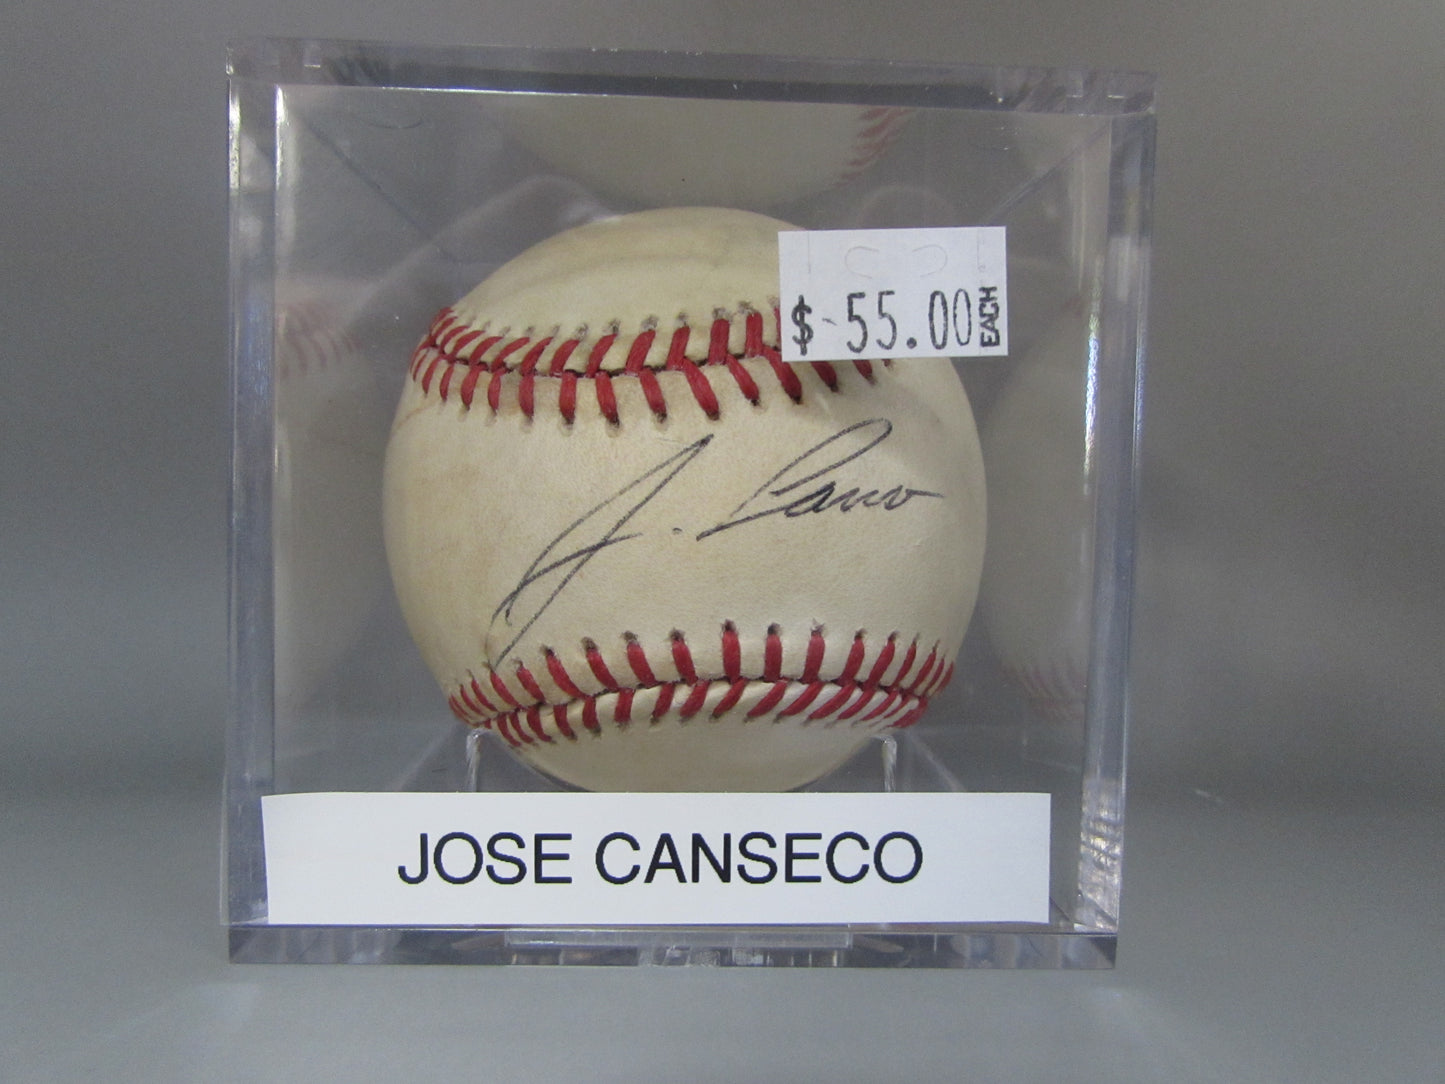 Jose Canseco signed baseball